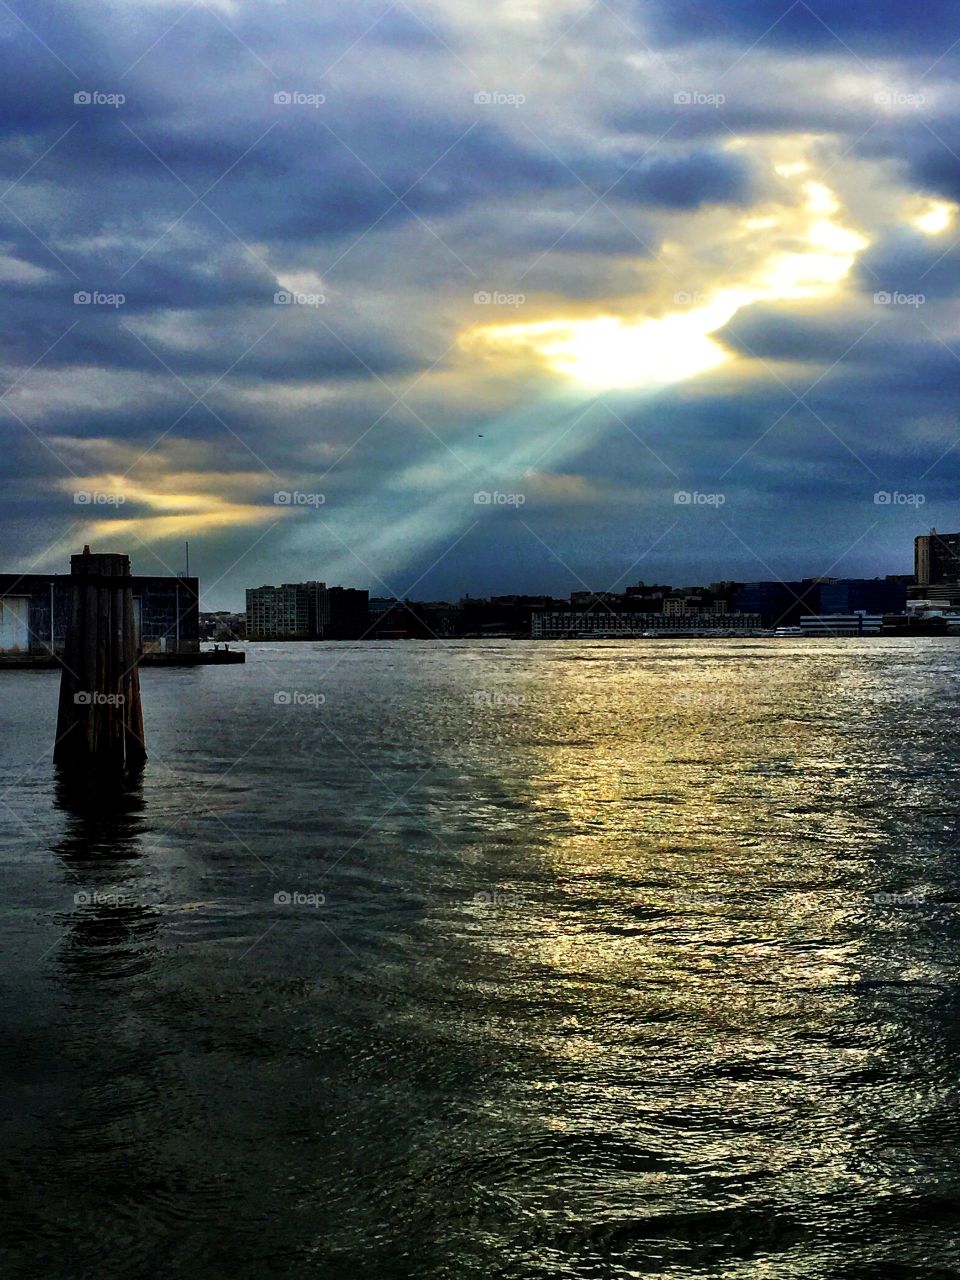 Beam of light shines down on the Hudson River, New York City.. Beam of light shines down on the Hudson River, New York City. iPhone photo.